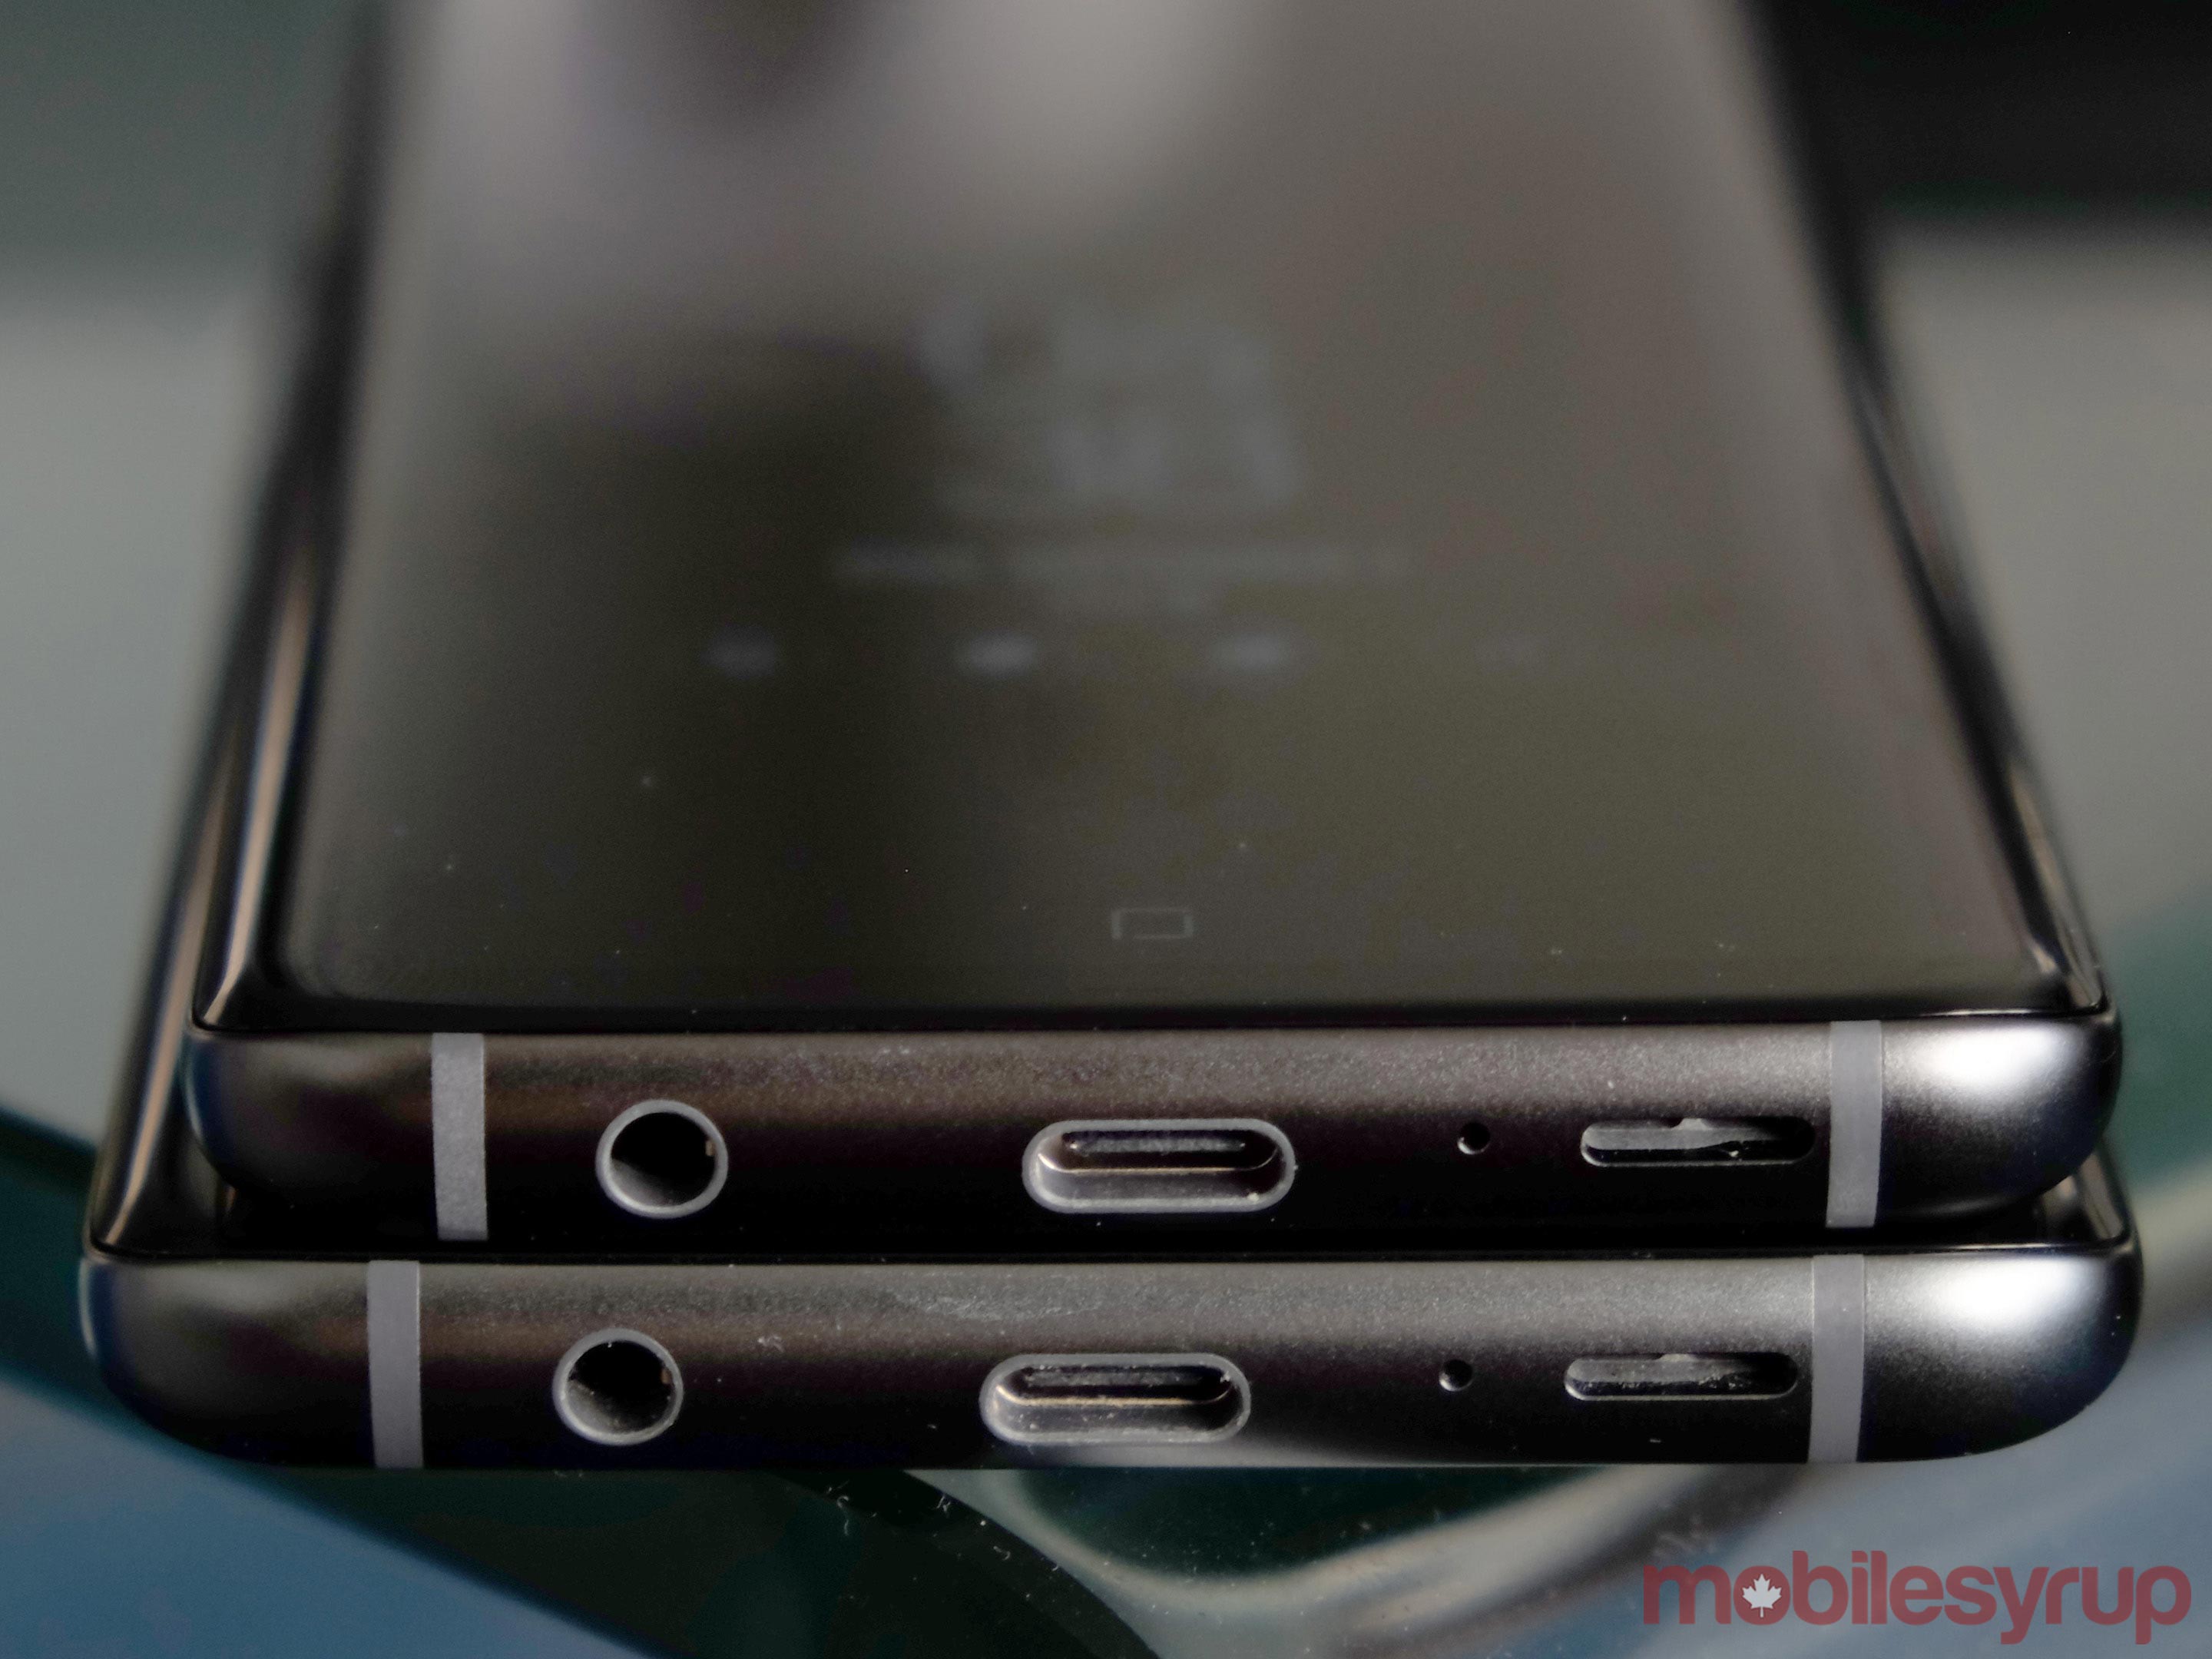 Samsung Galaxy S9+ charging port